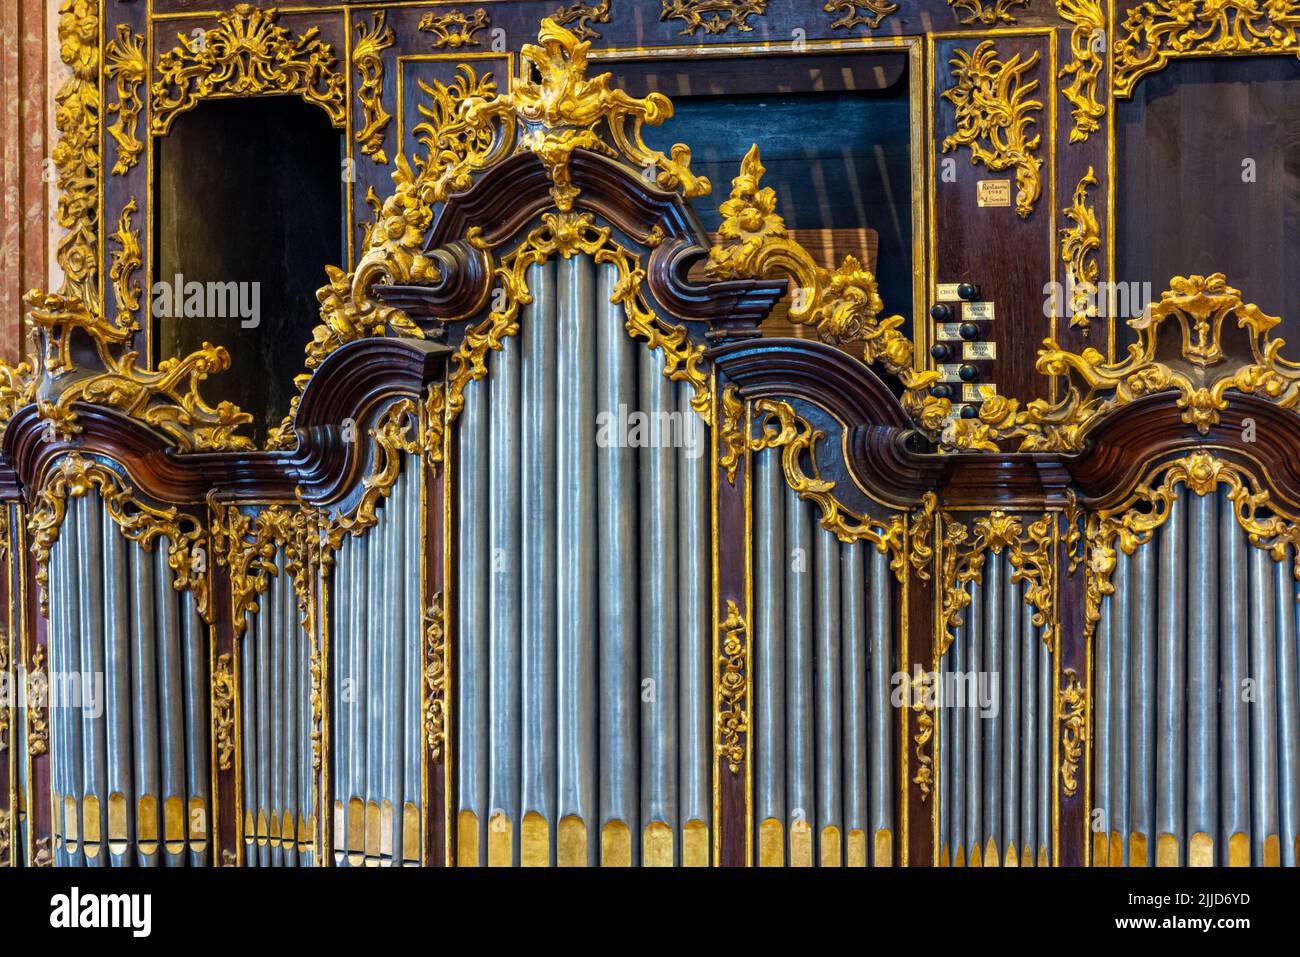 Pipe organ inside Igreja dos Clerigos a Baroque 18th century church designed by Nicolau Nasoni in the centre of Porto a major city in Portugal. Stock Photo